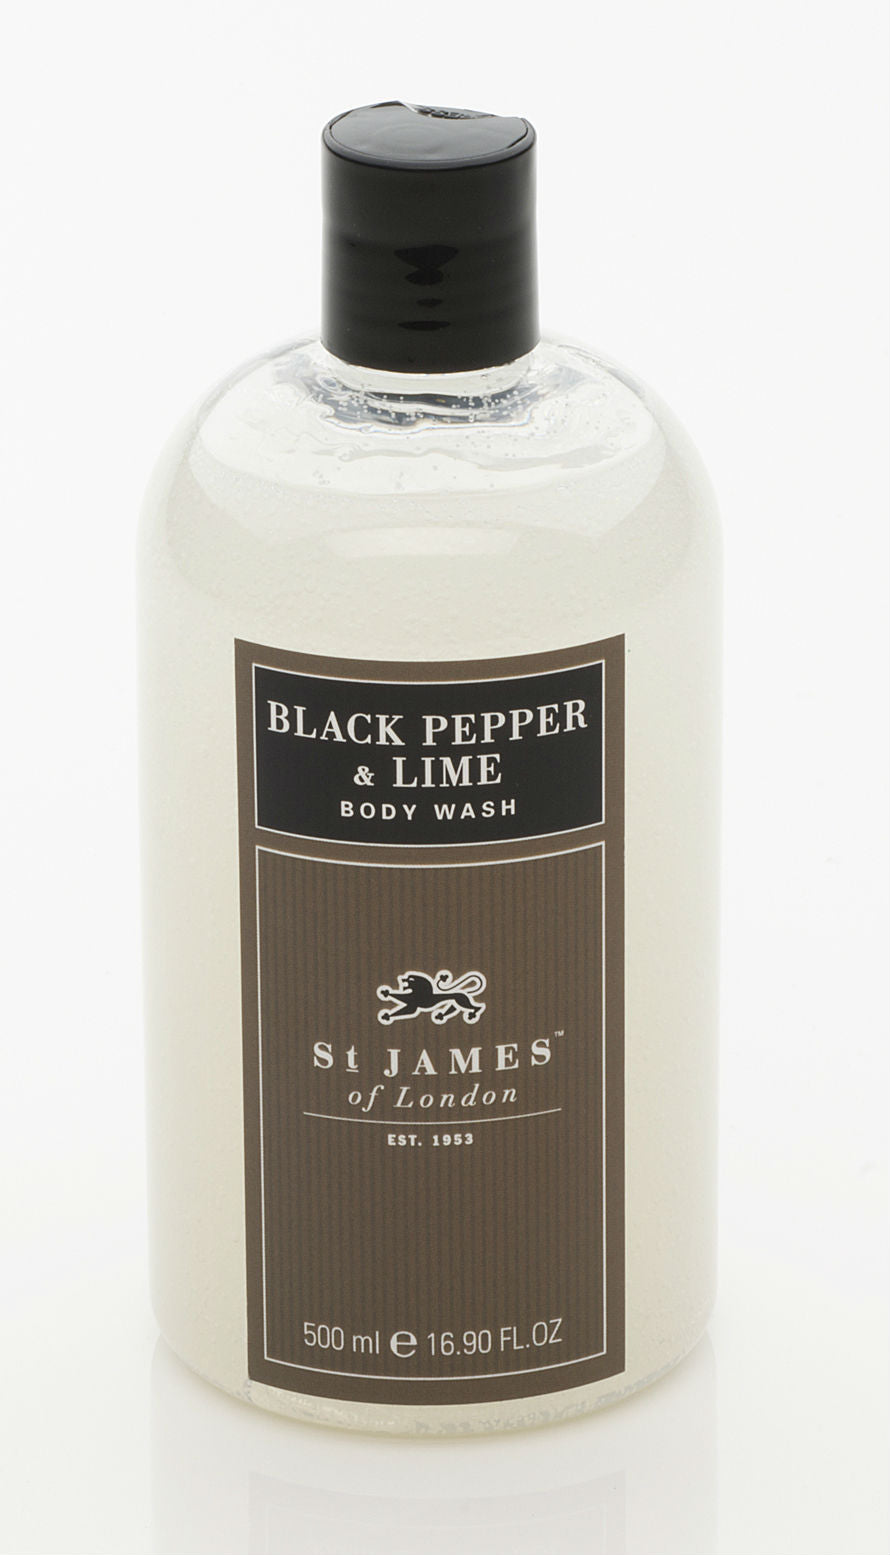 Black Pepper & Lime Body Wash - St. James of London